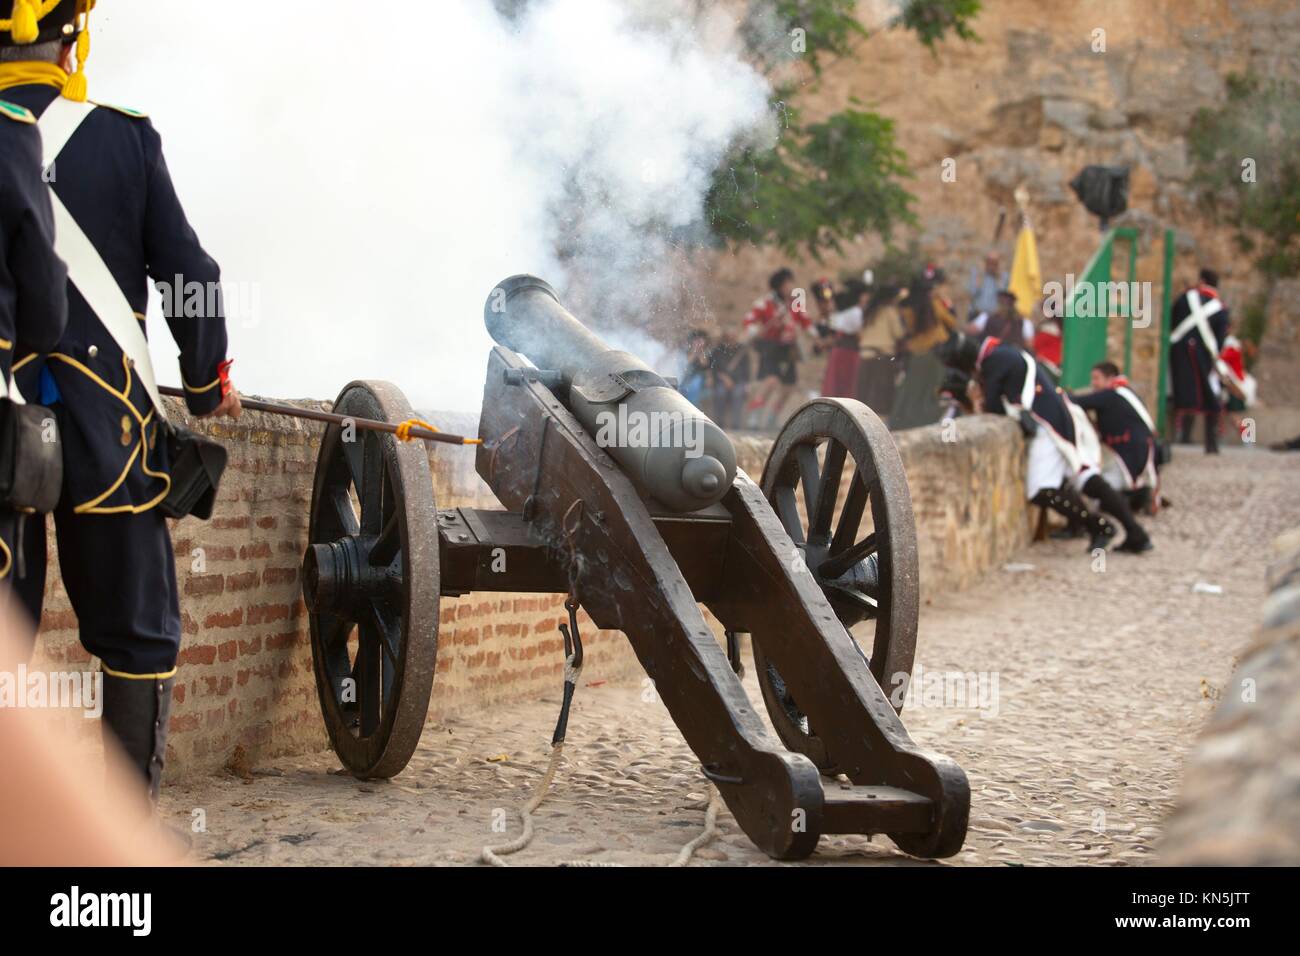 Napoleonic artillery shooting at La Albuera Battle Reenactment. Stock Photo